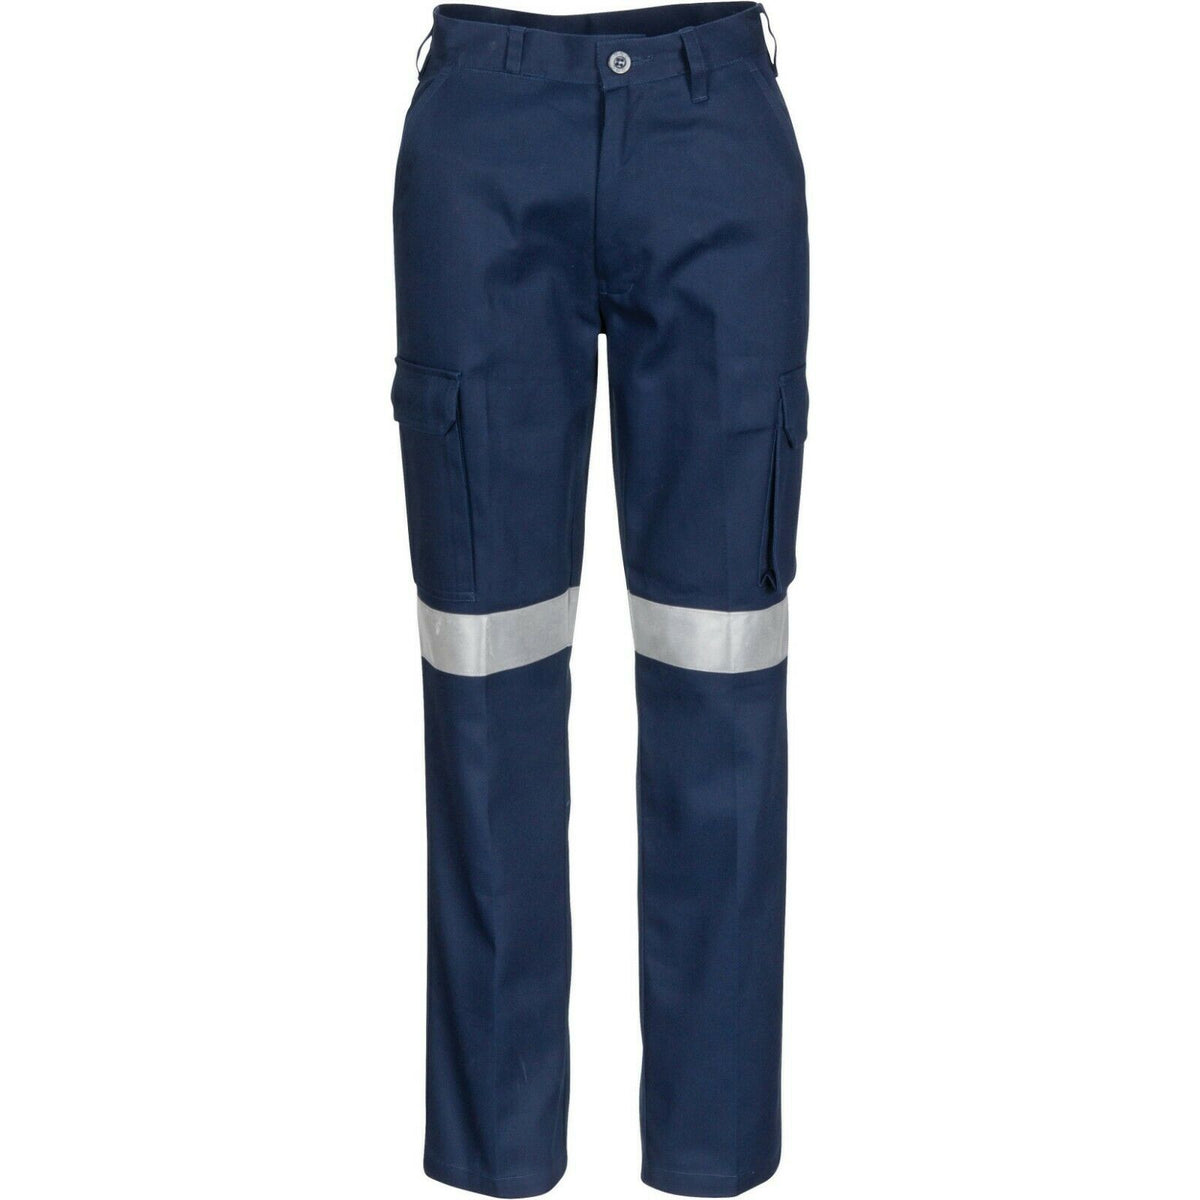 DNC Workwear Men RipStop Cargo Pants CSR Reflective Taped Tough Pant Work 3386